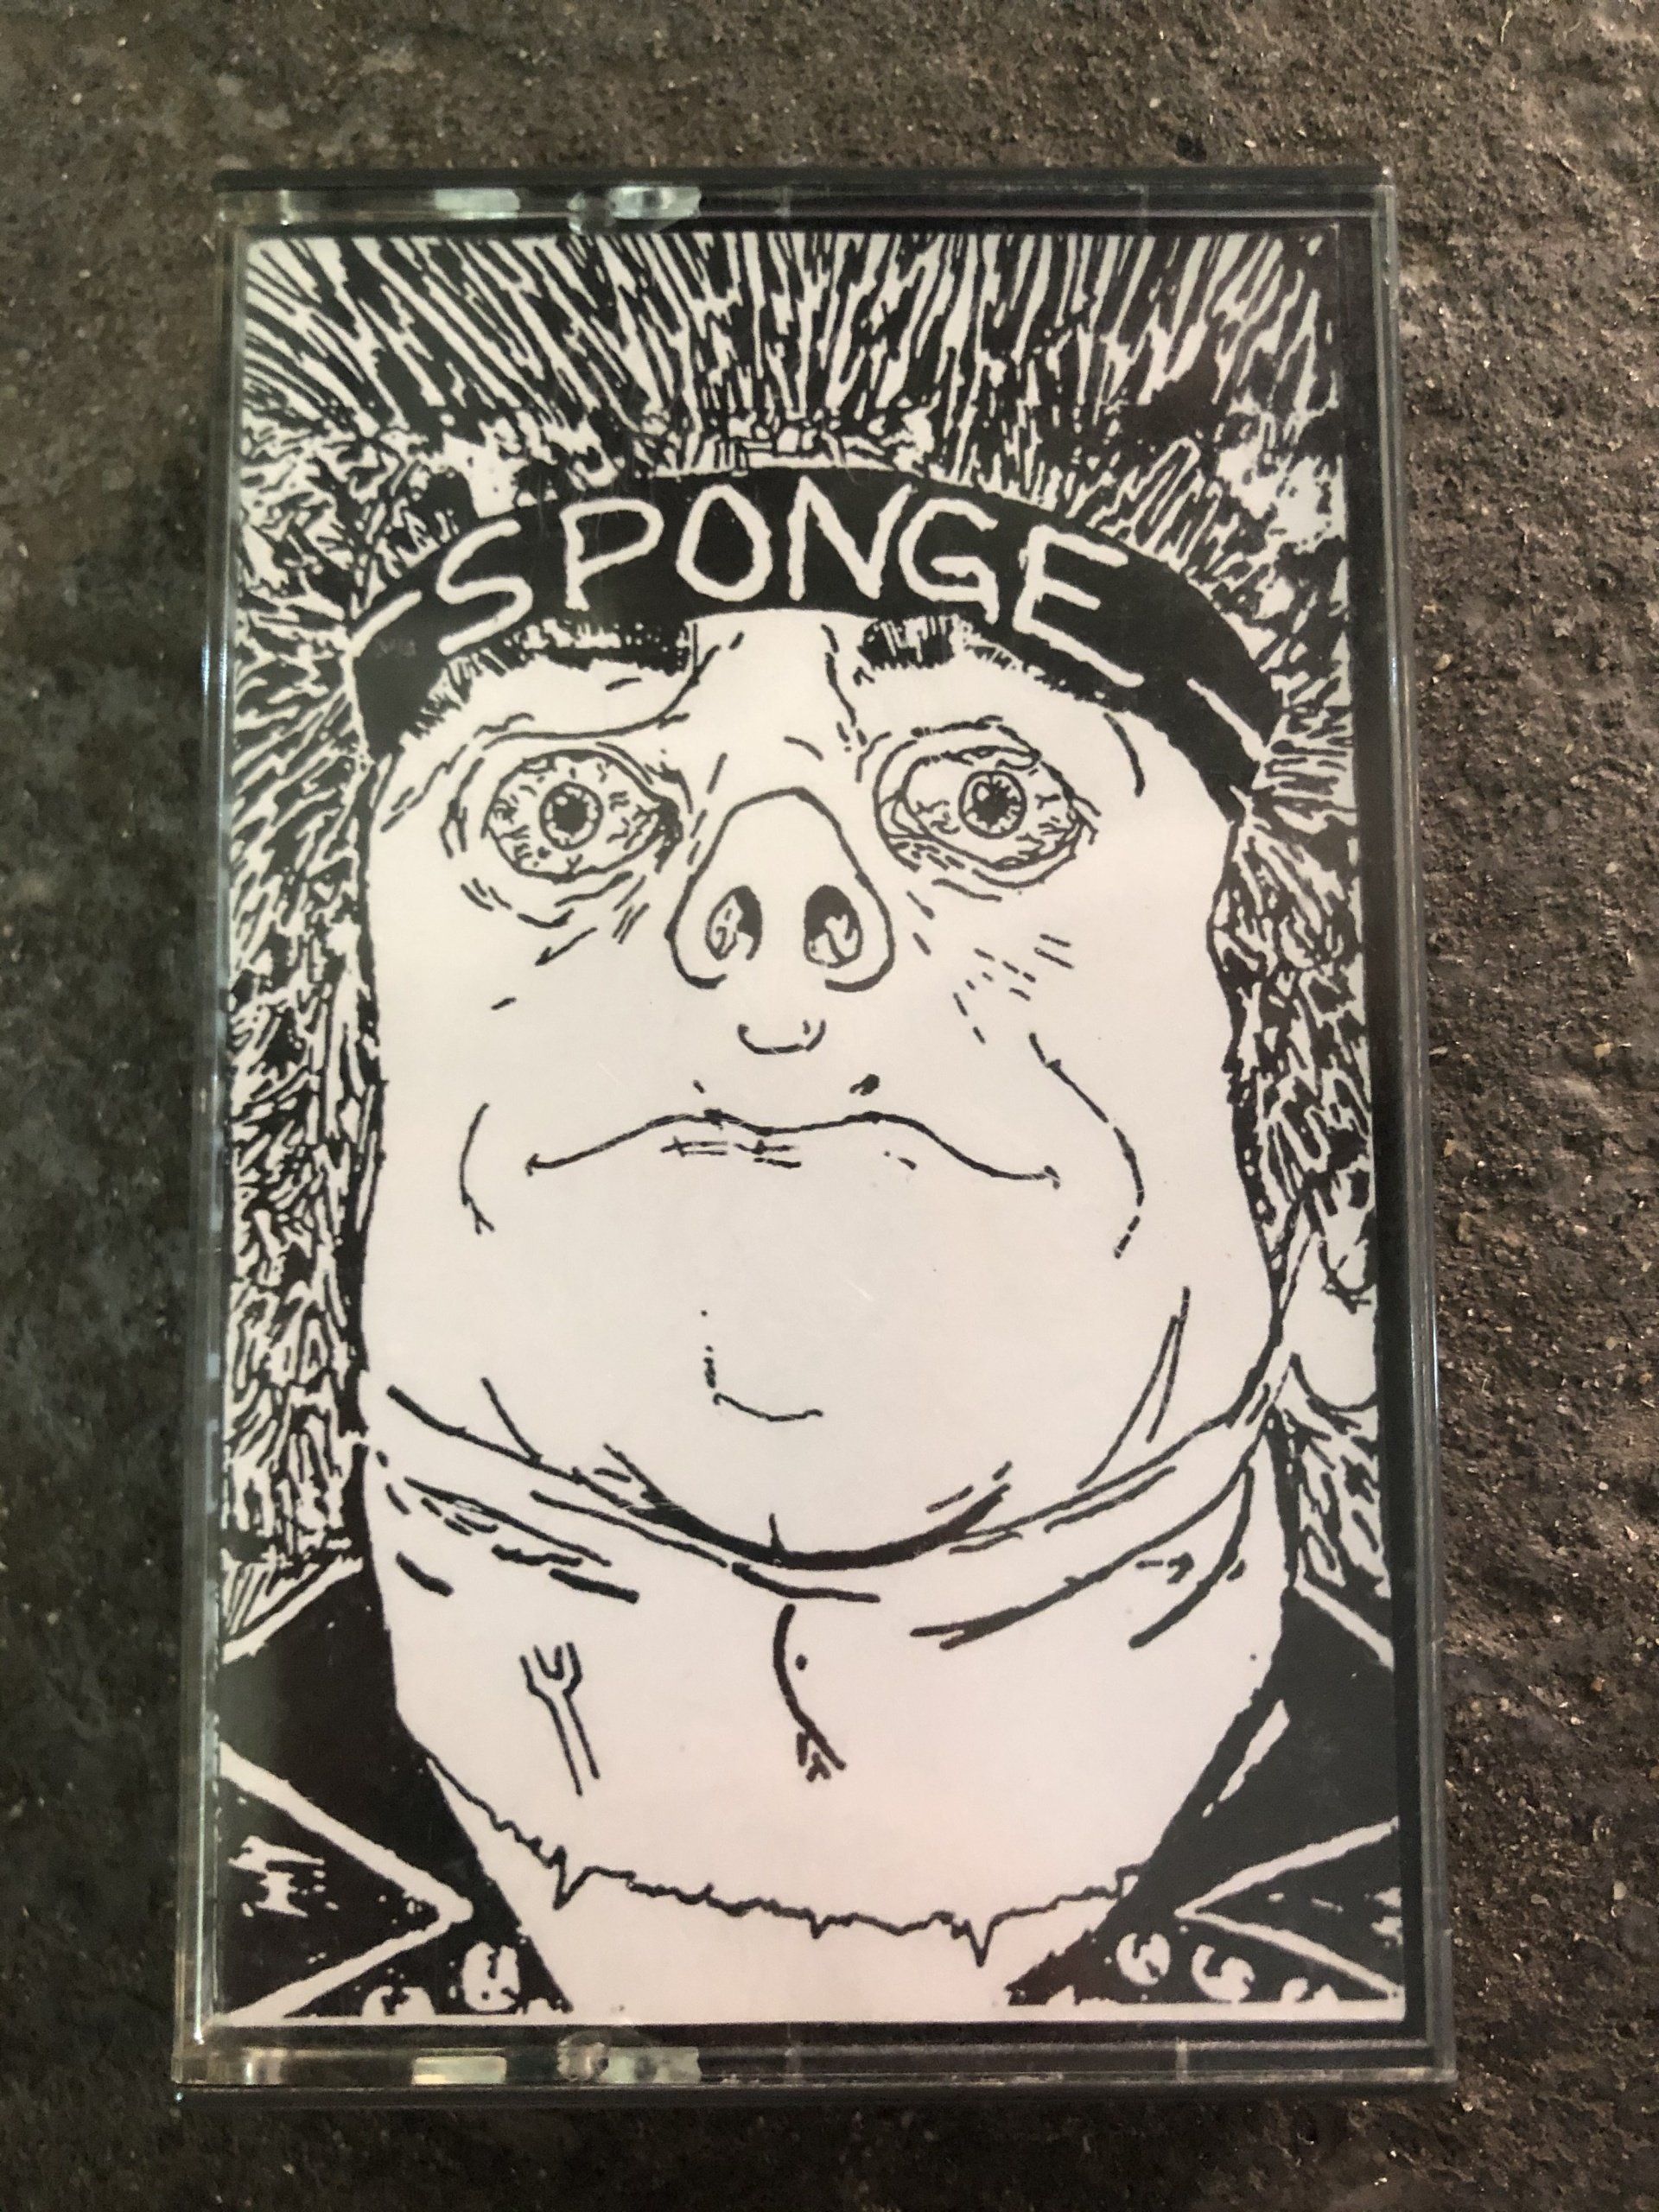 Sponge (FL) Discography on Cassette - $5